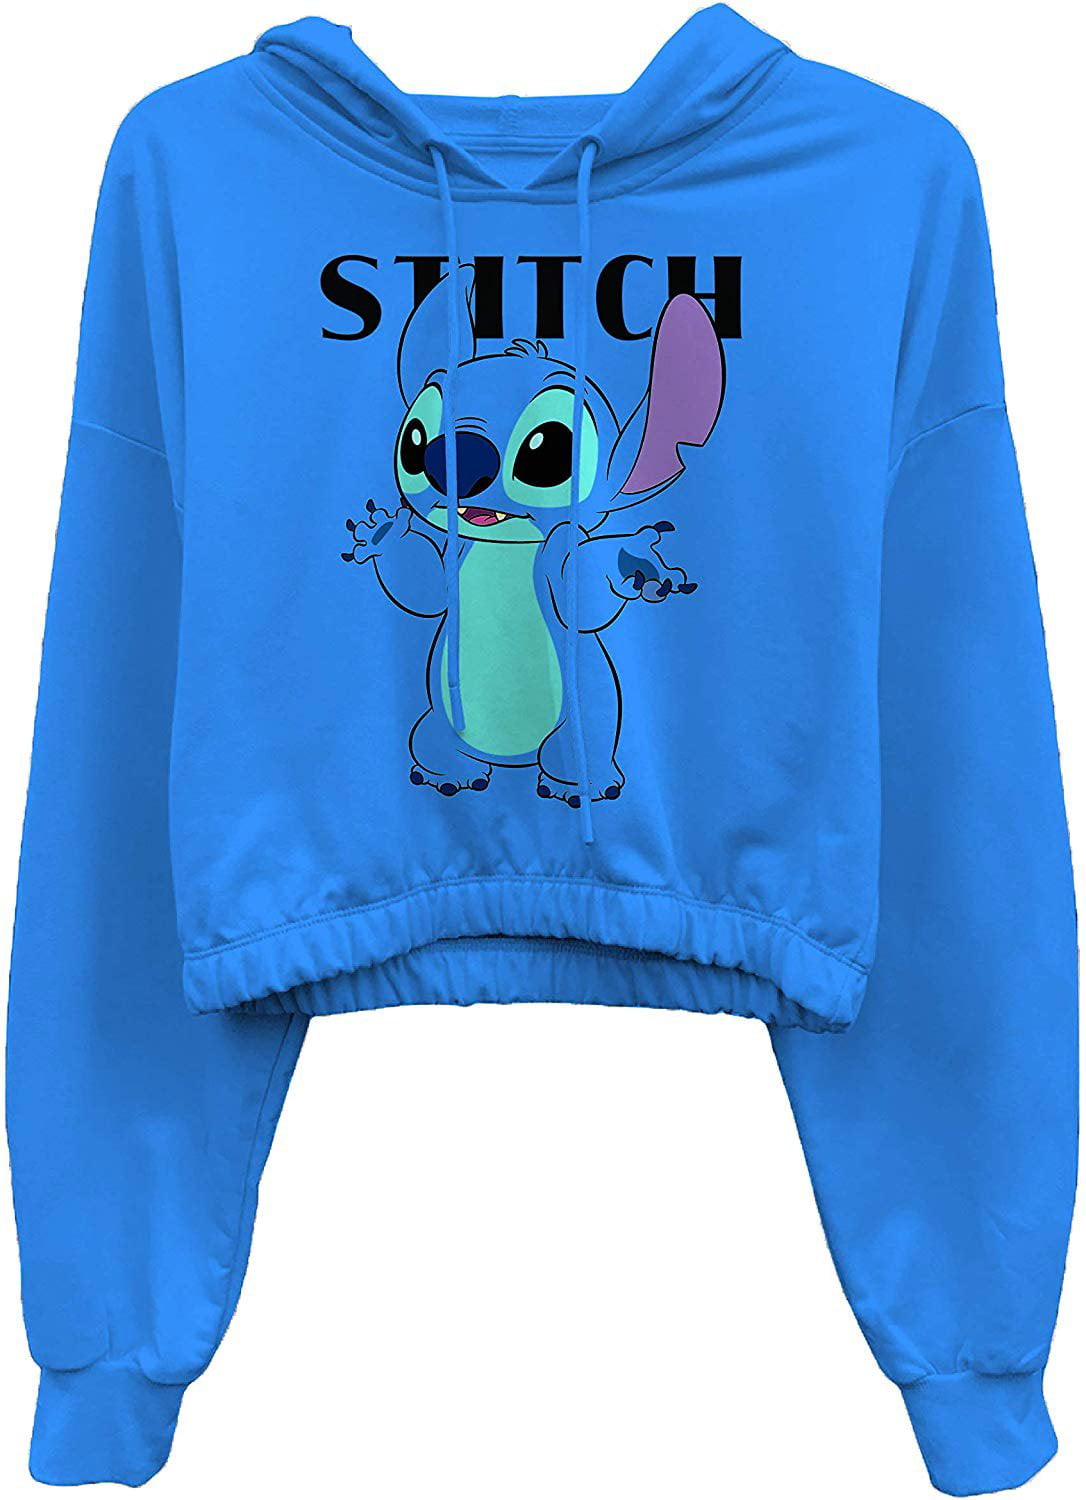 Lilo and stitch clothing uk